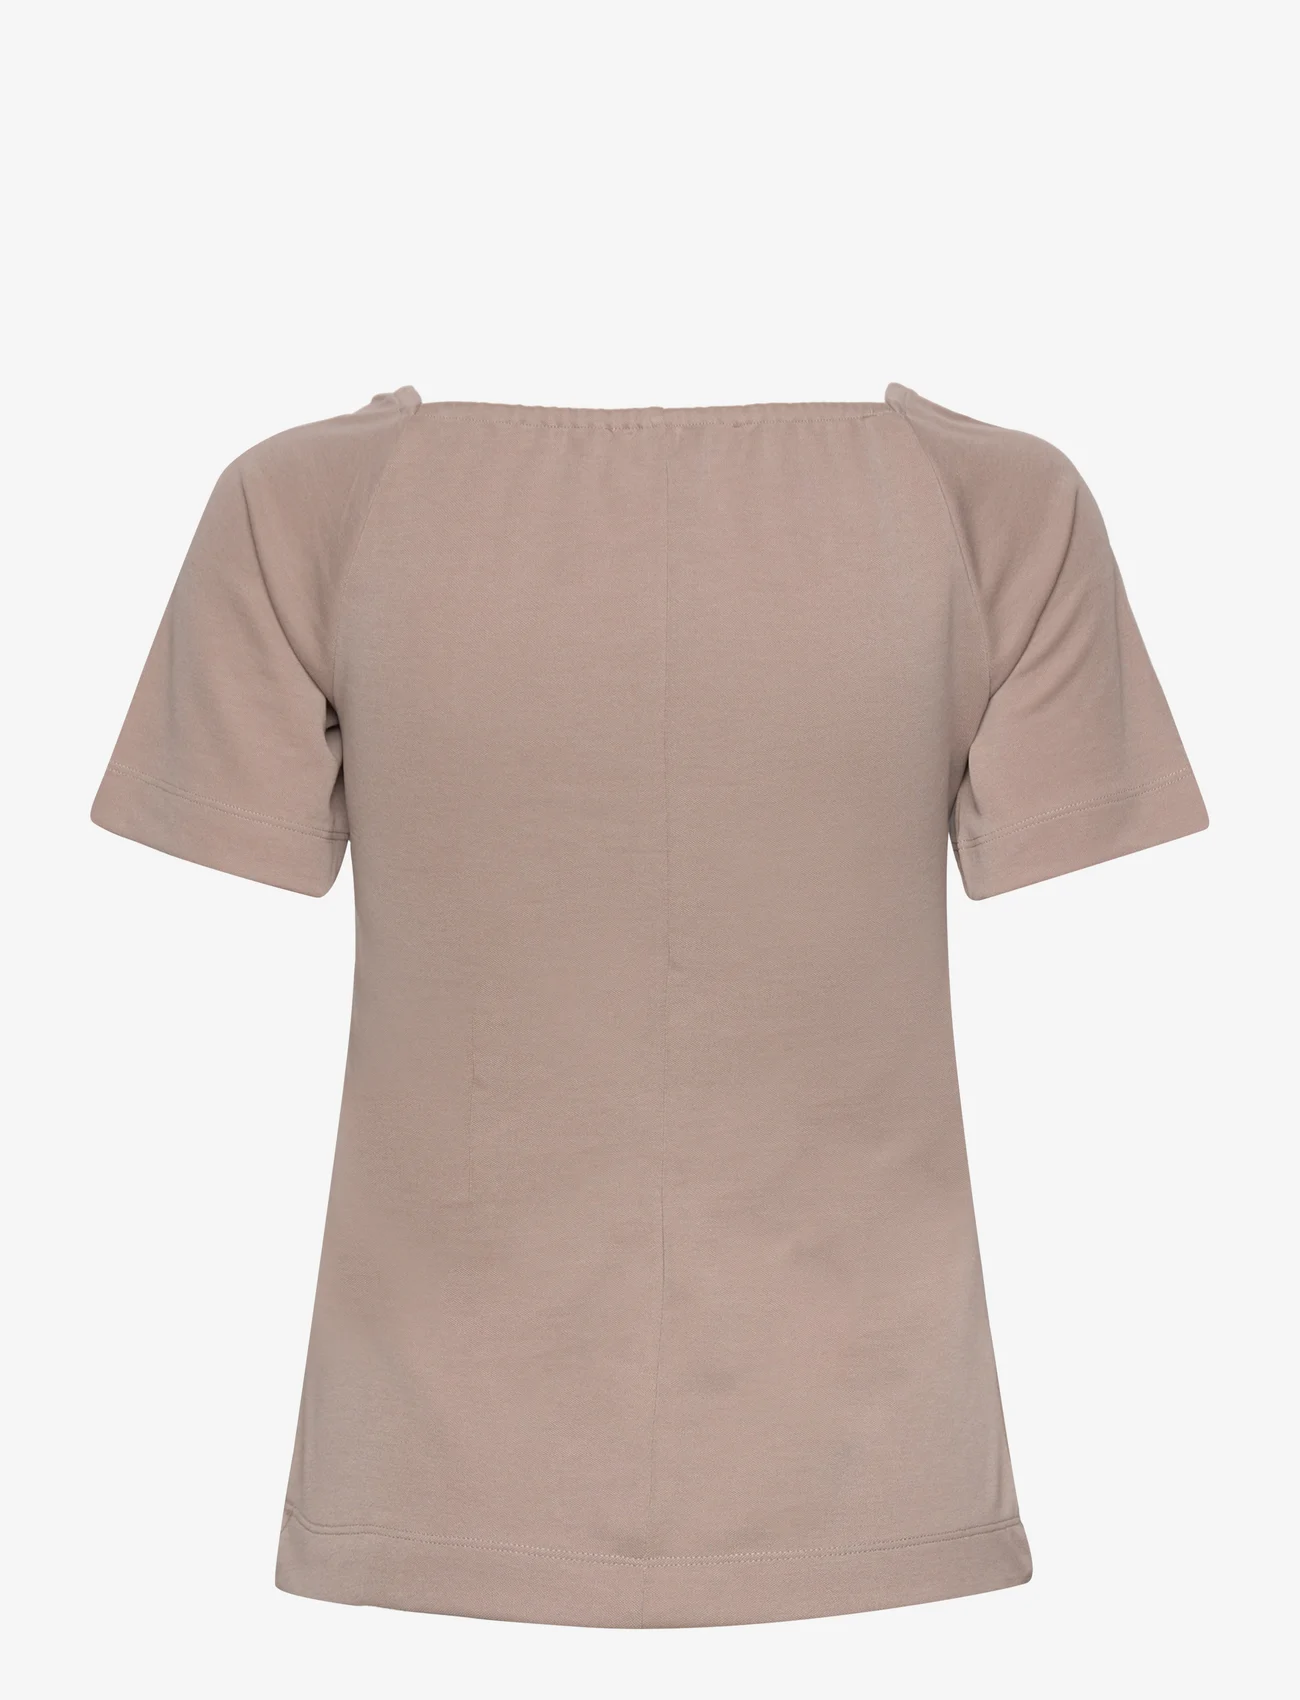 InWear - KainoaIW Top - t-shirts - mocha grey - 1